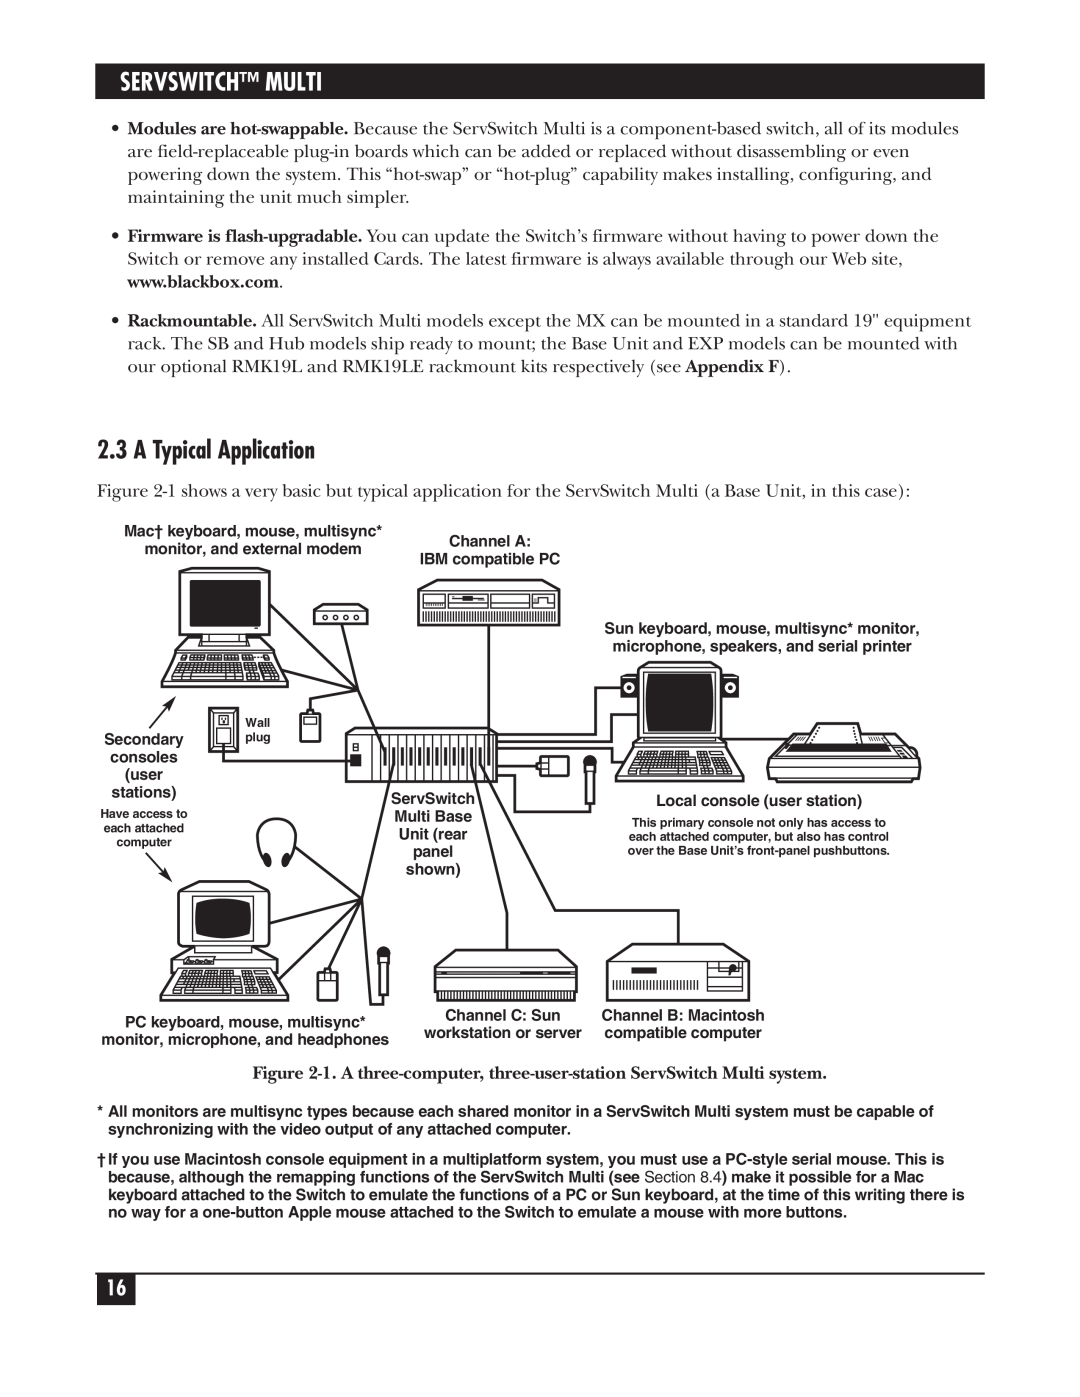 Black Box KV162A manual A Typical Application, Servswitch Multi 